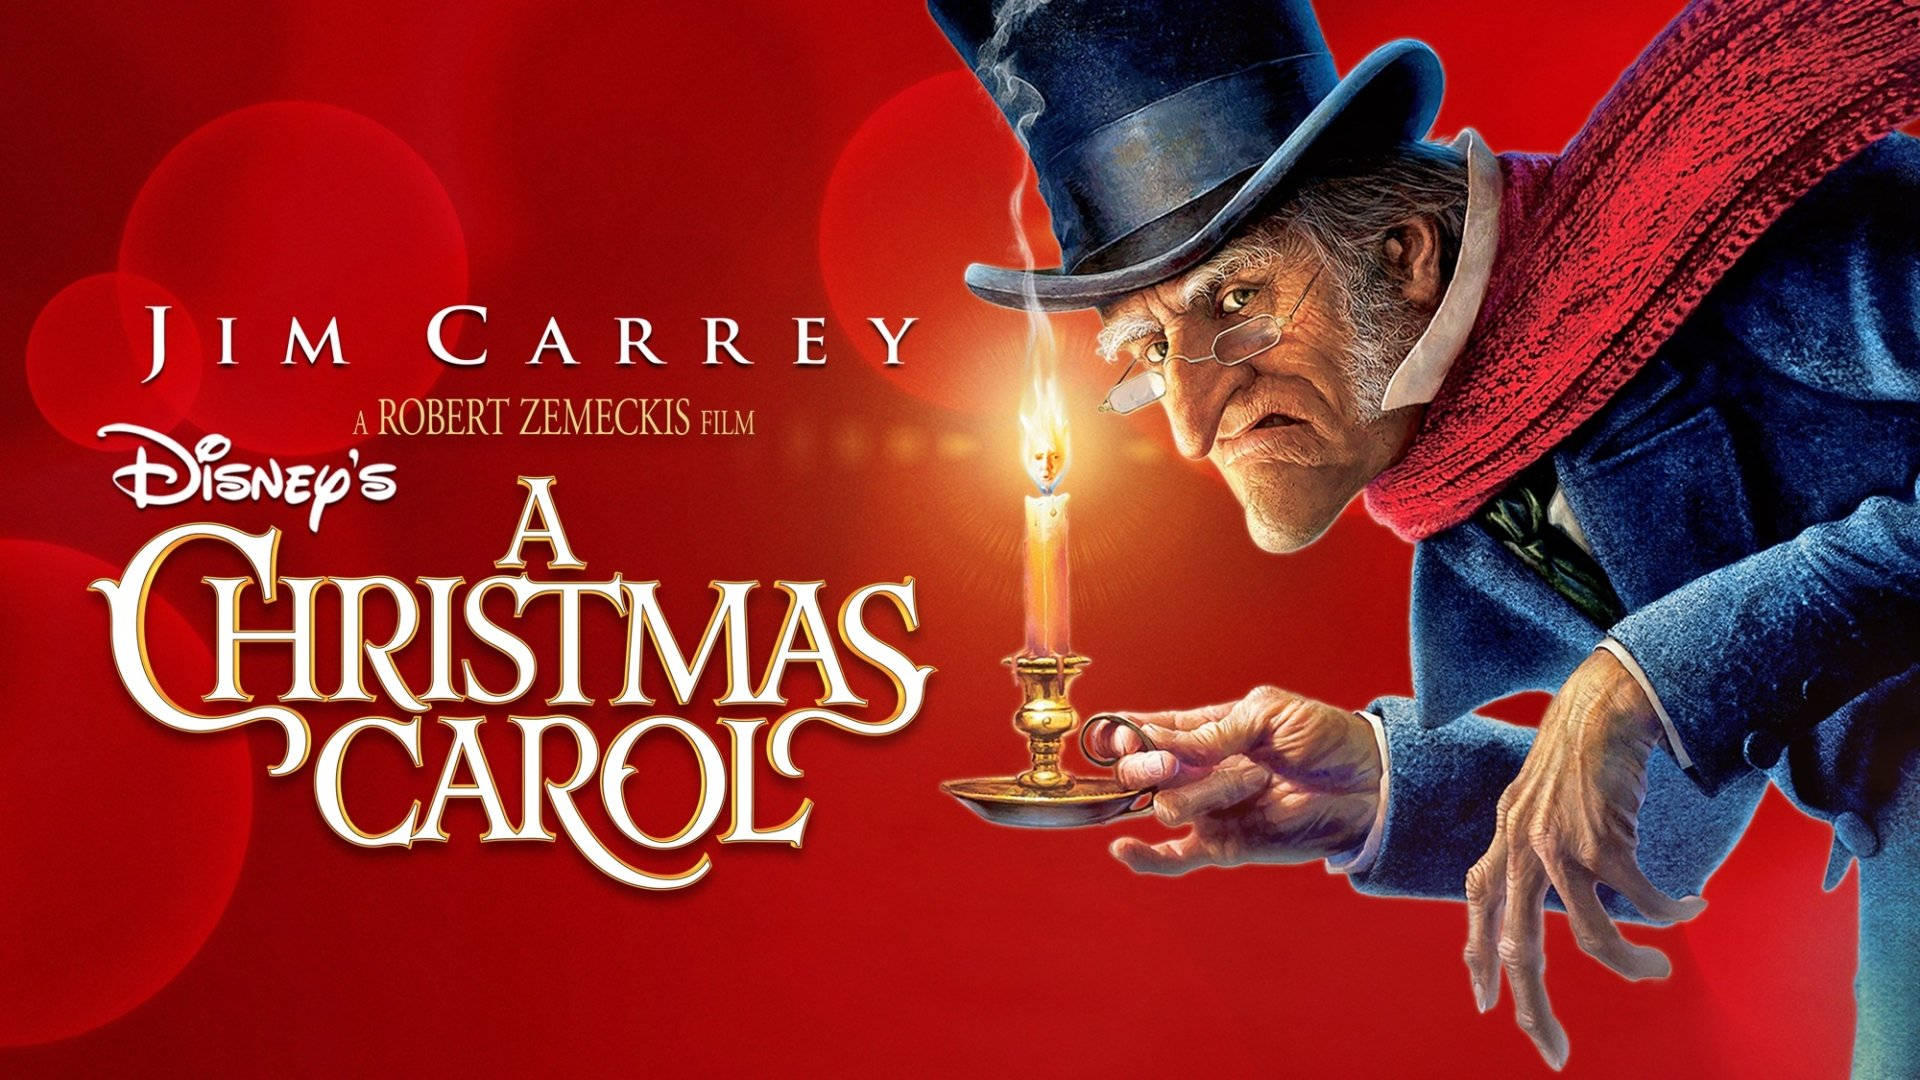 Jim Carrey A Christmas Carol Background